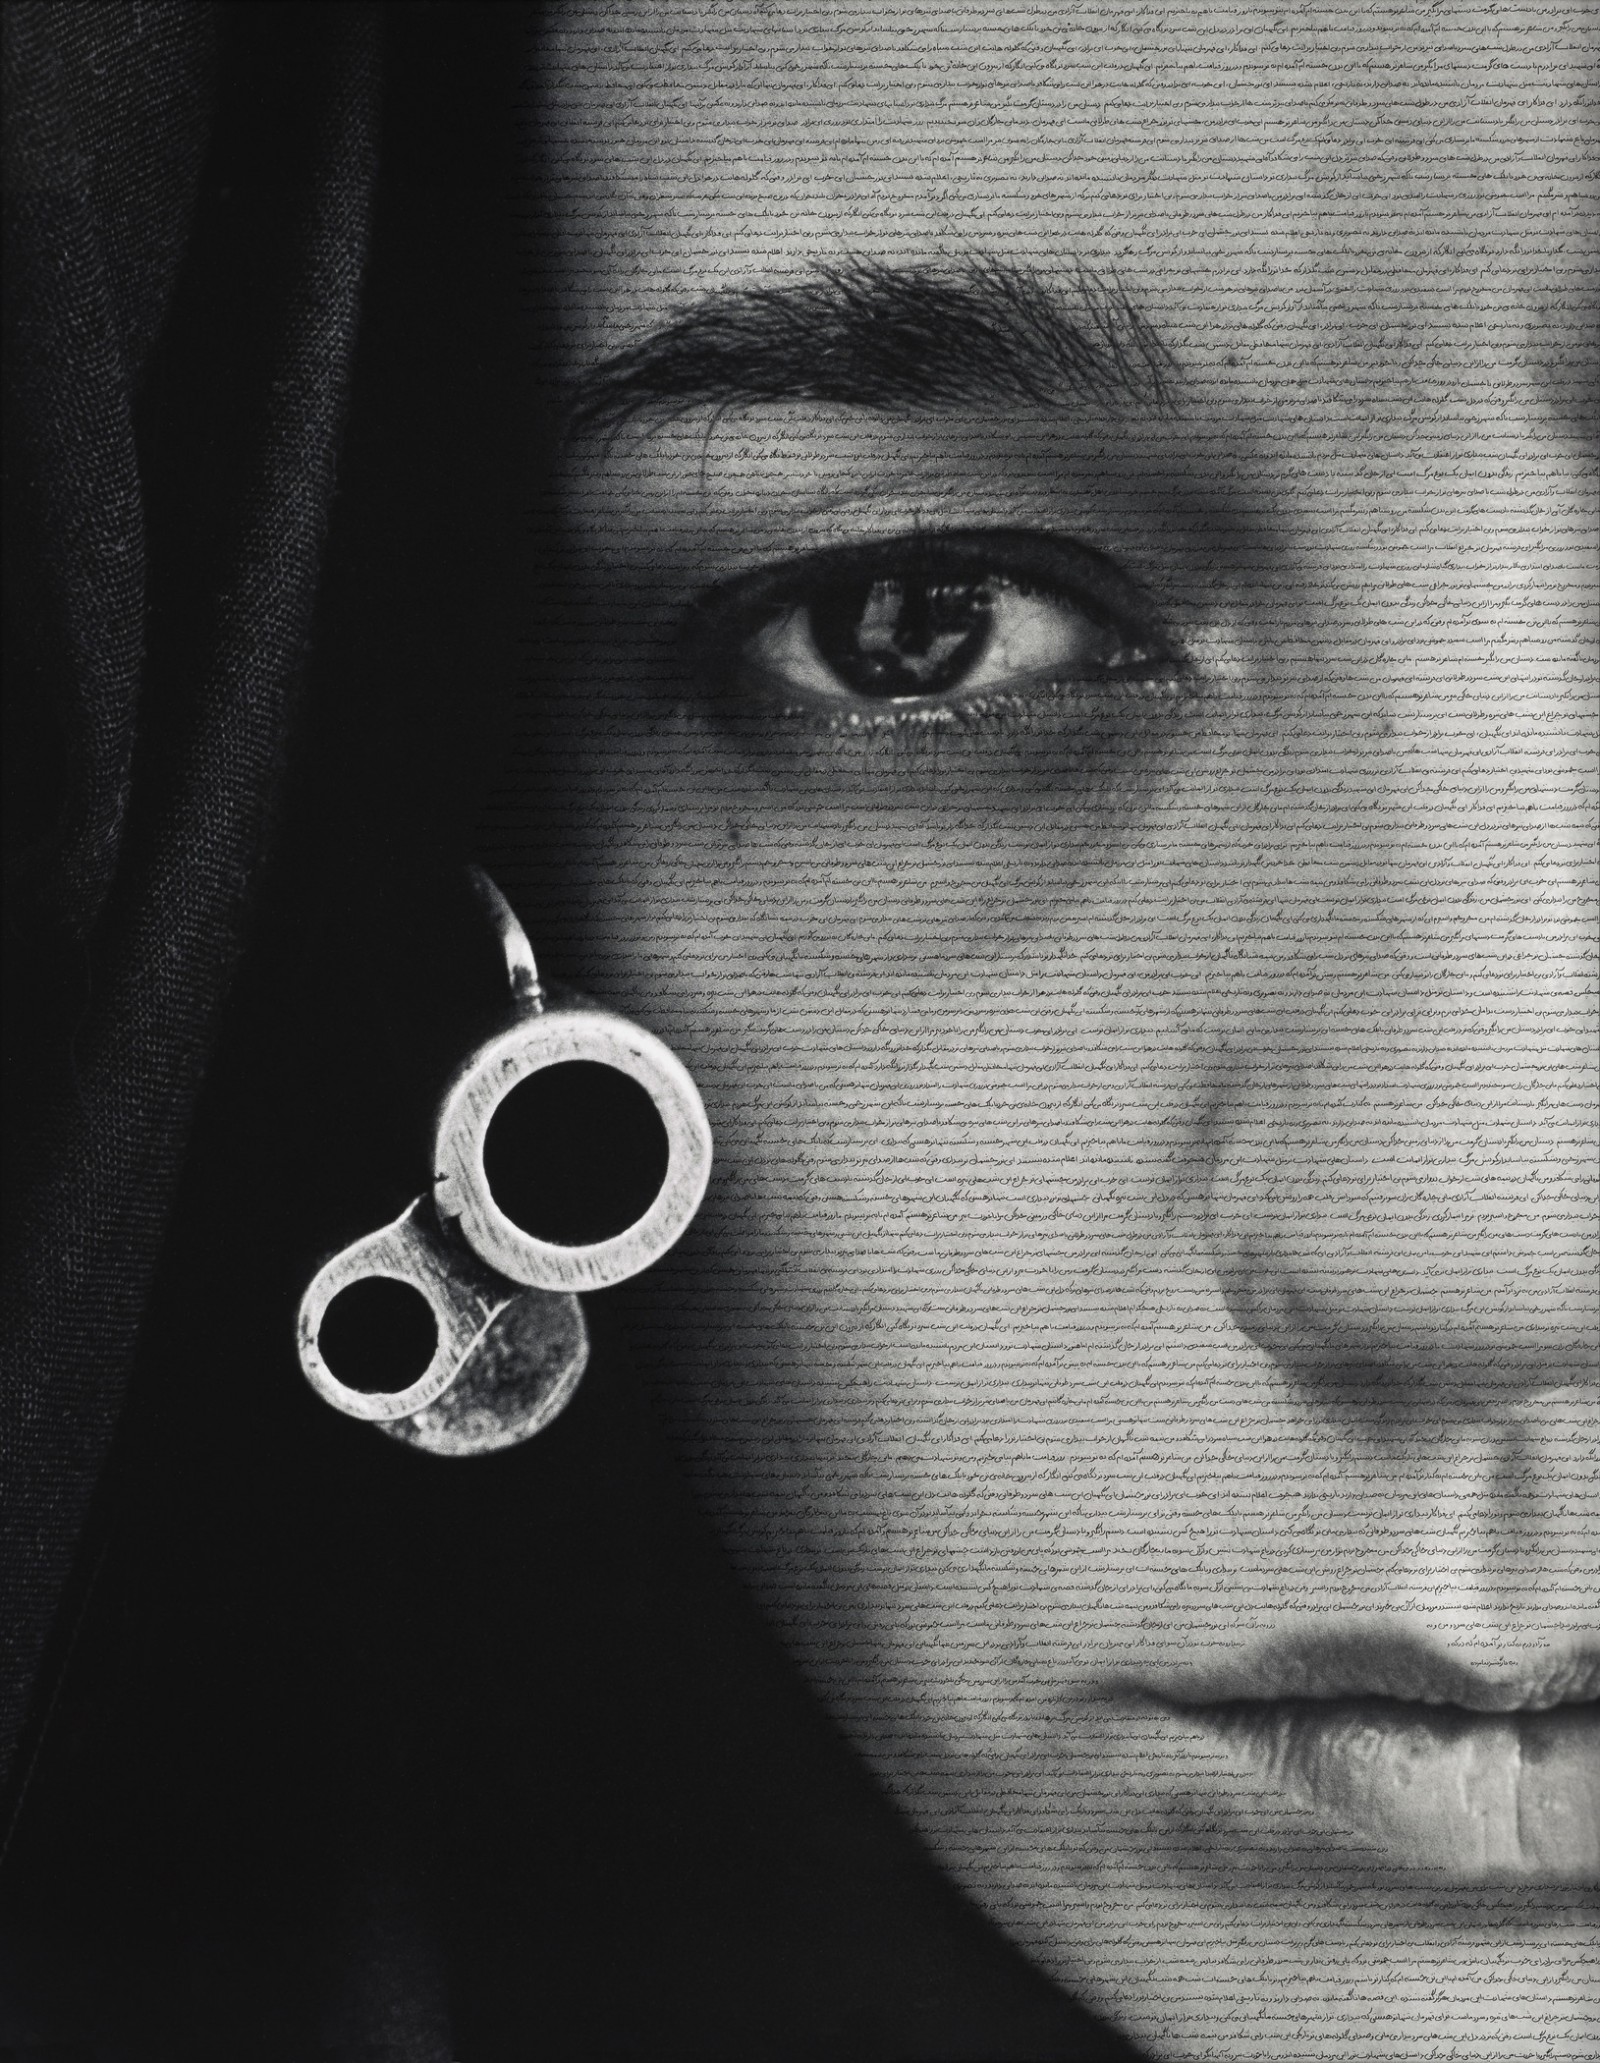 Image: Shirin Neshat, Speechless, 1996